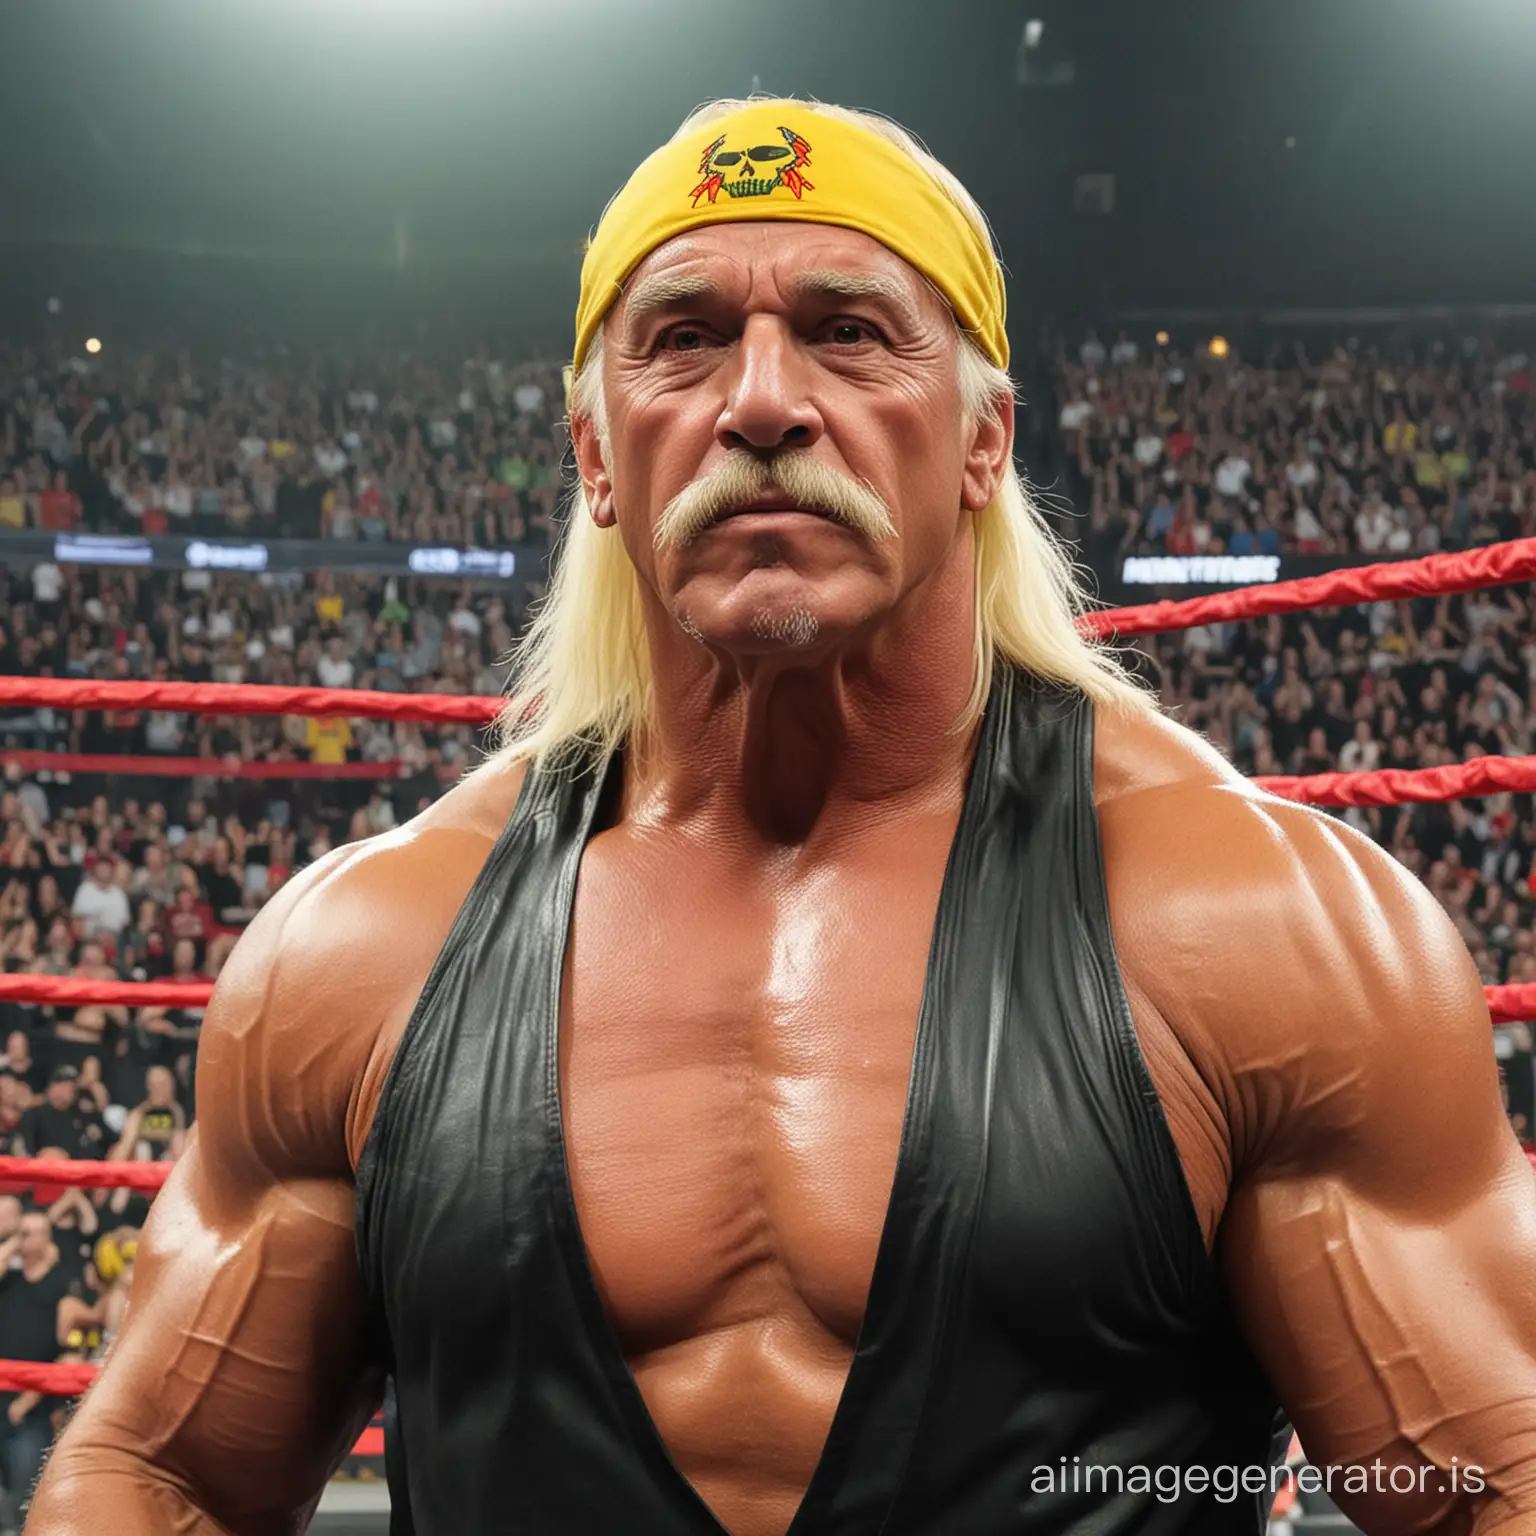 Iconic-Wrestler-Hulk-Hogan-Dominates-the-Arena